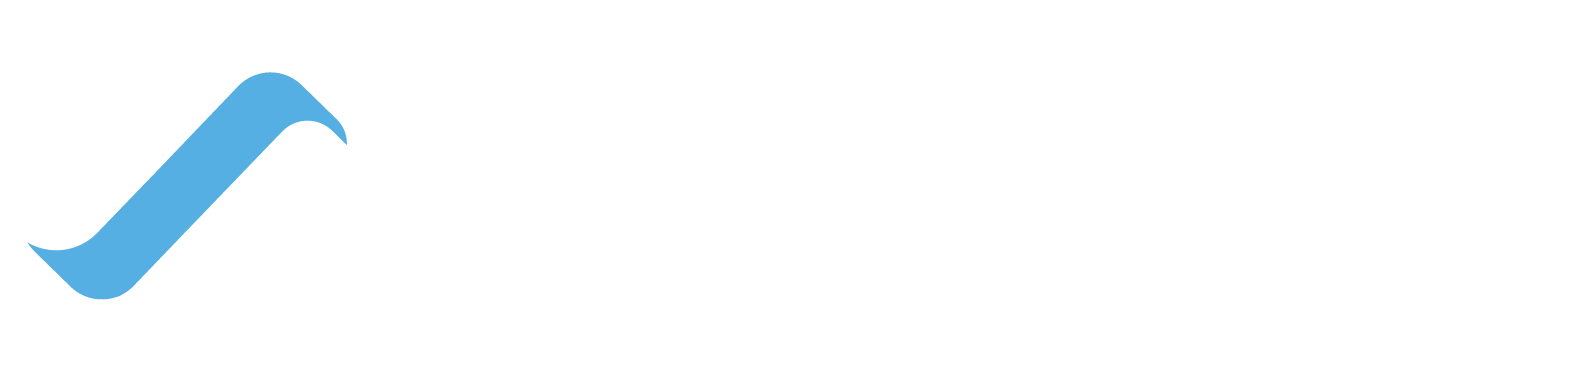 Pharming Group logo large for dark backgrounds (transparent PNG)